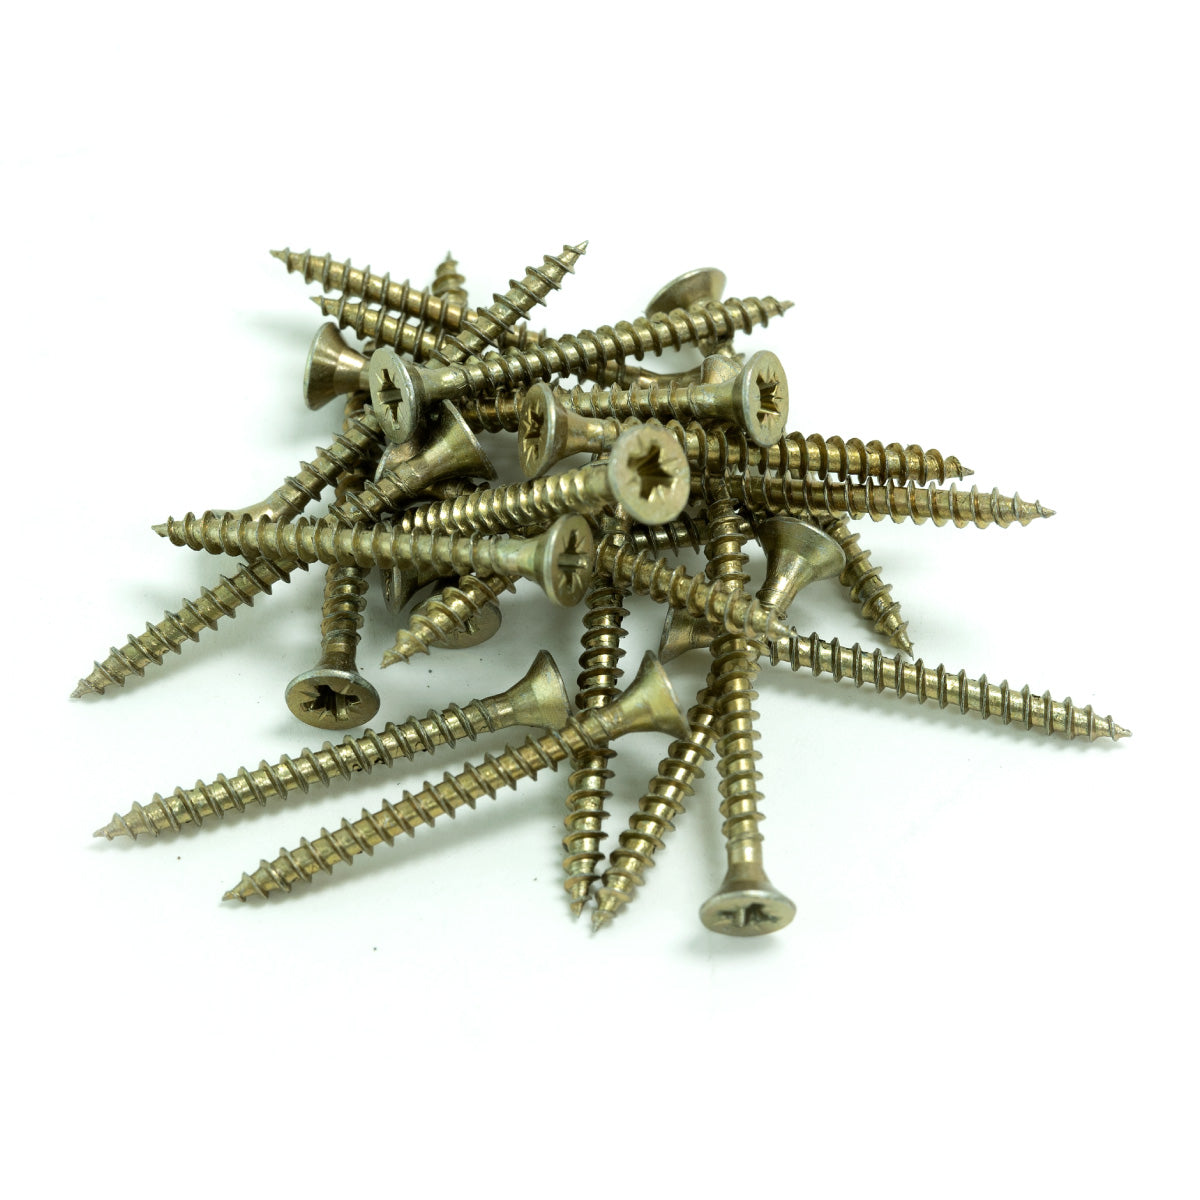 100pcs yellow zinc plated countersunk single thread screws 4x40mm (no brand name)